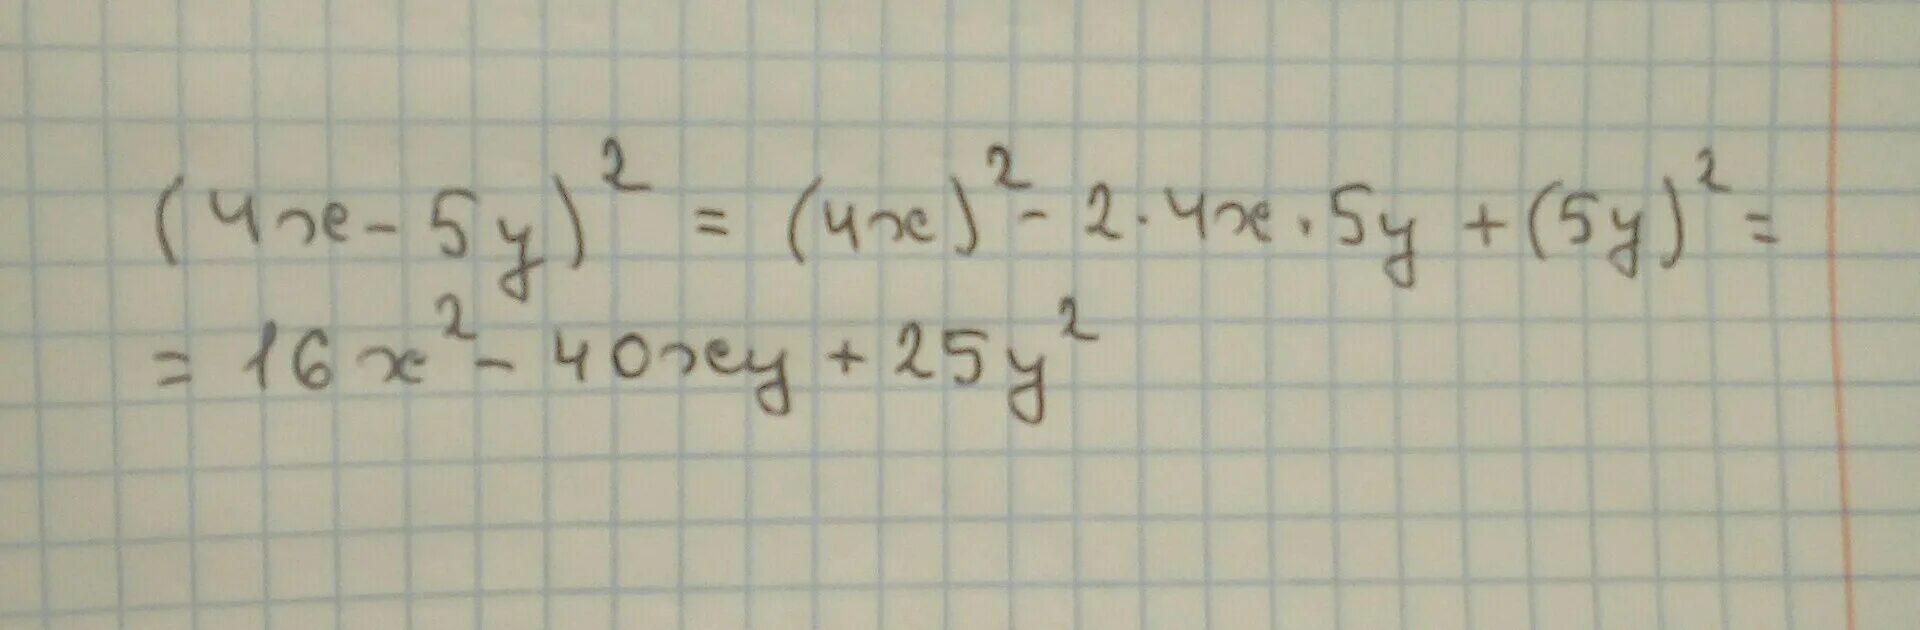 4а 1 4а 1 преобразуйте в многочлен. (А+2)*(А-2)-(Б-2)*(2+Б). Преобразуйте в многочлен 3а+4 в 2 степени. А:Б-а2-б2:б2:а+б:б. Преобразуйте выражение в многочлен 3/4x-y.